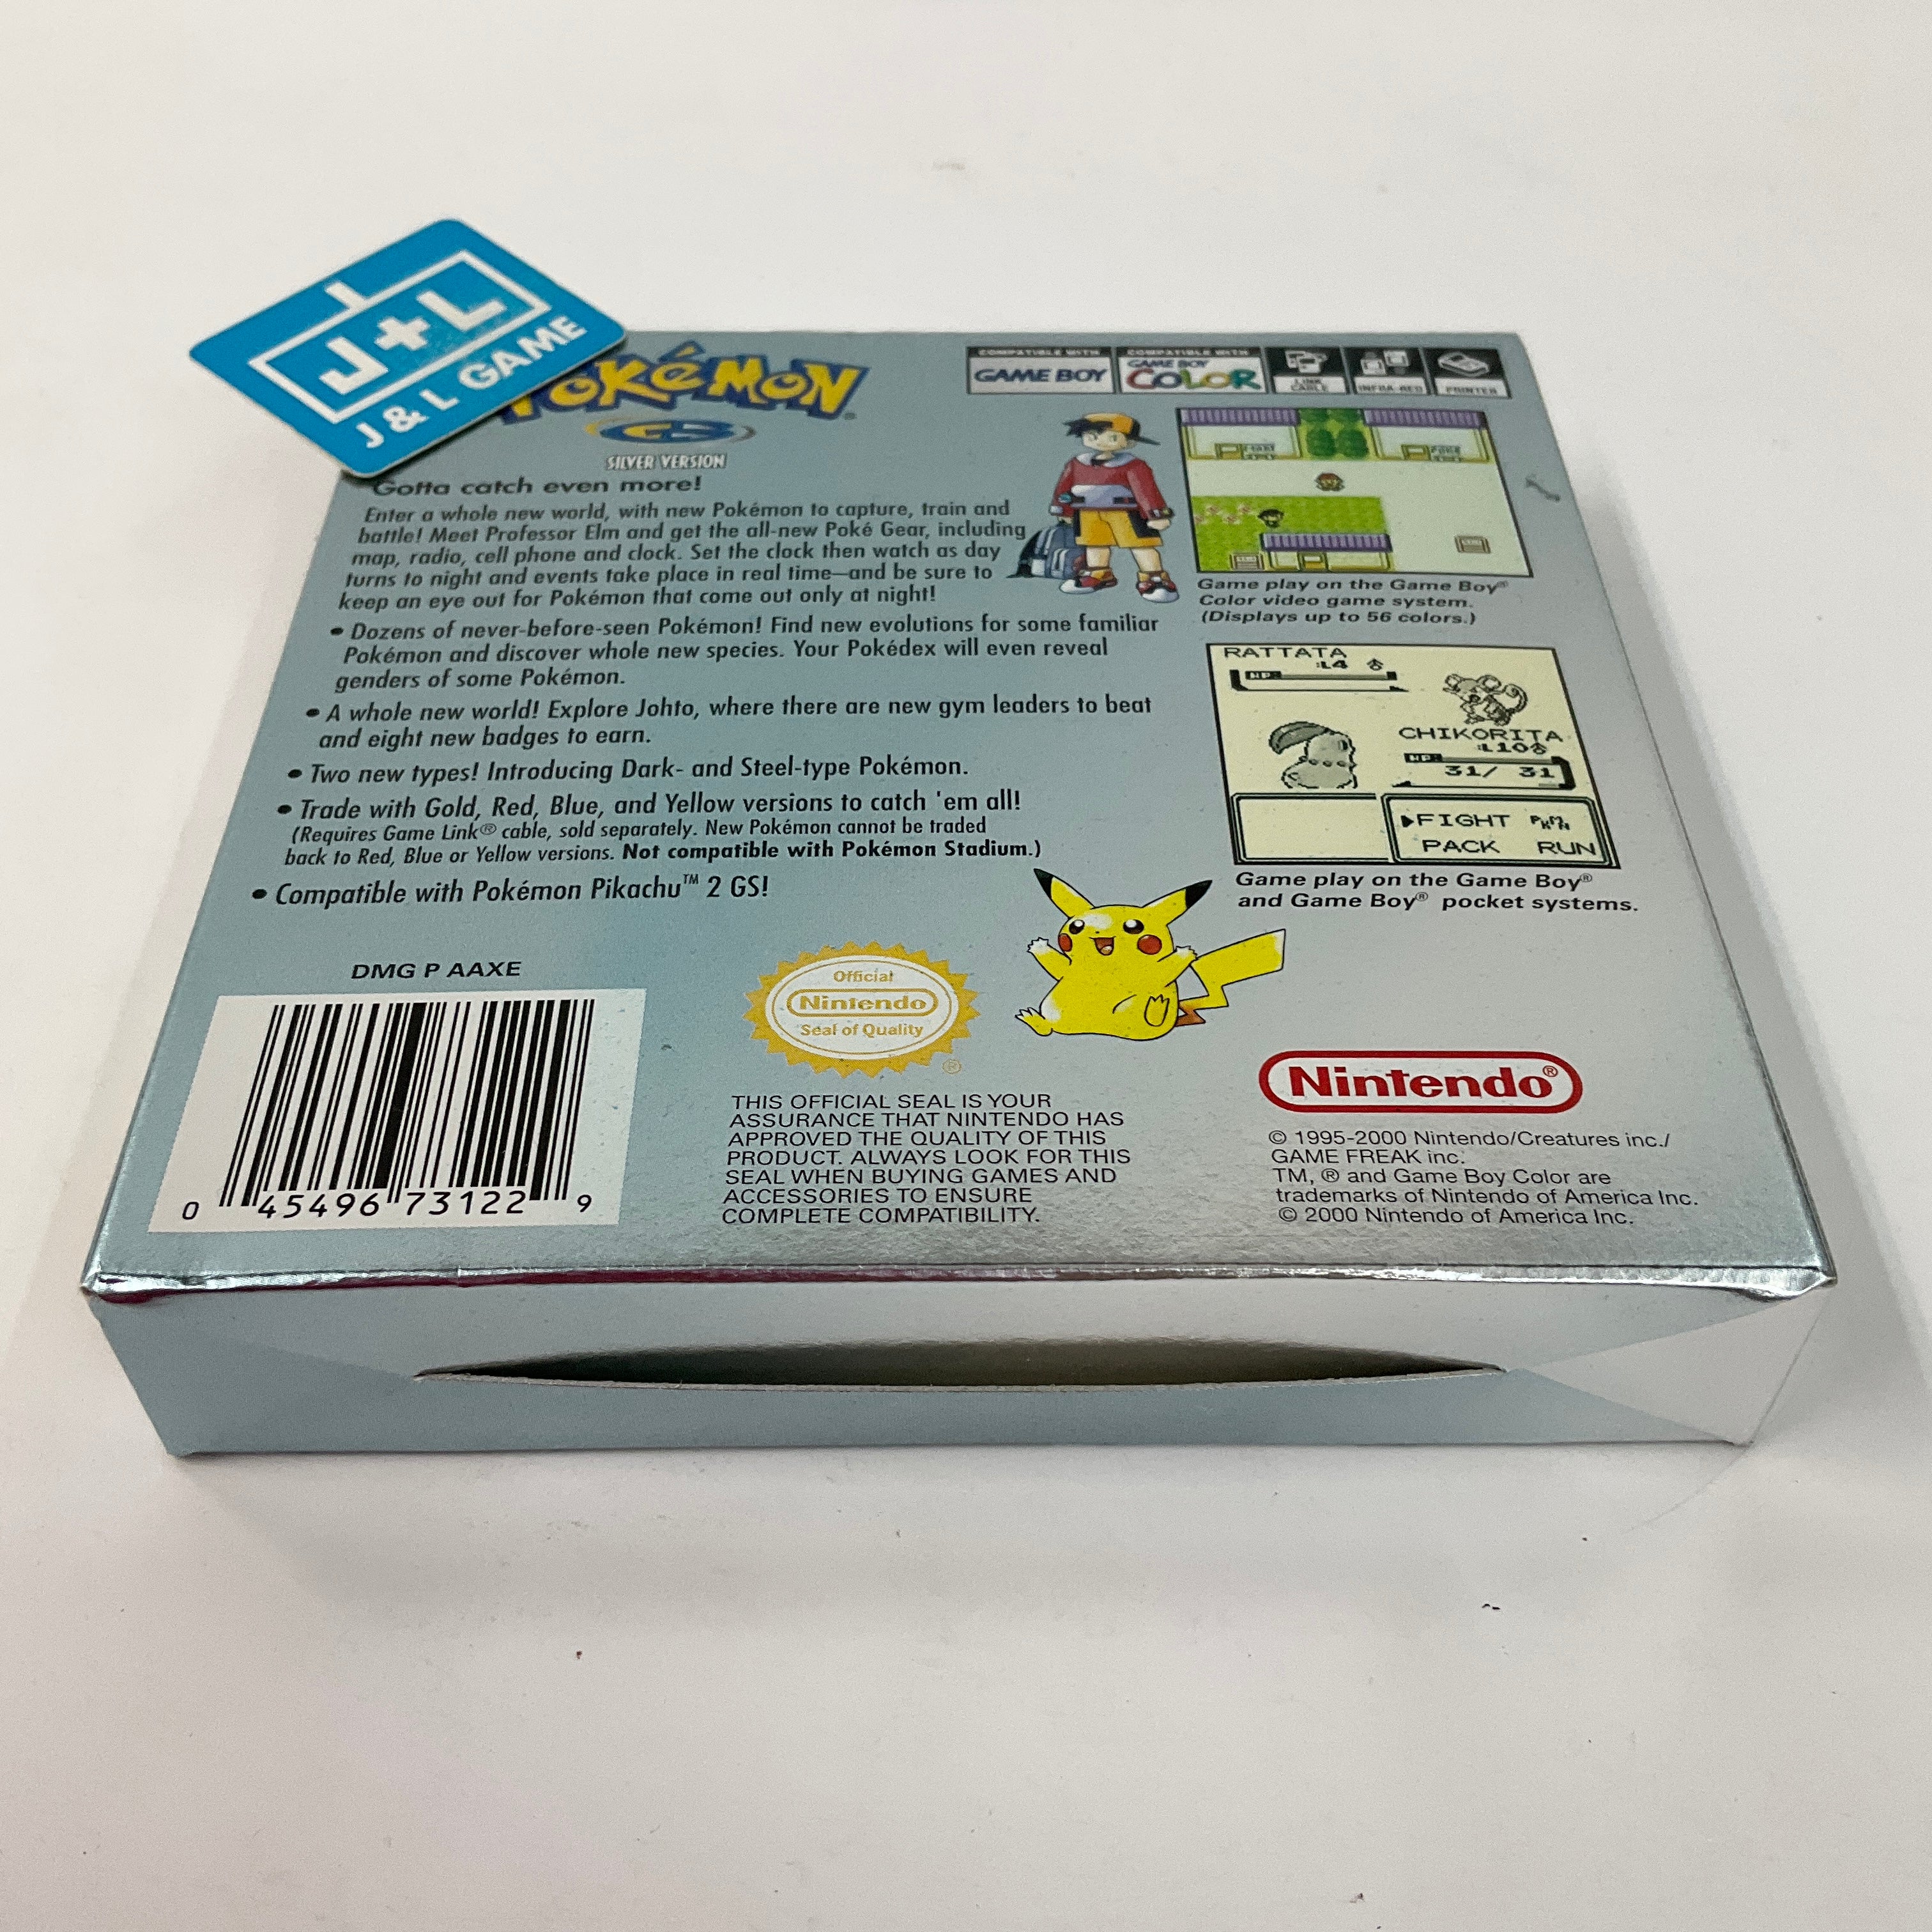 Pokemon Silver Version - (GBC) Game Boy Color [Pre-Owned] Video Games Nintendo   